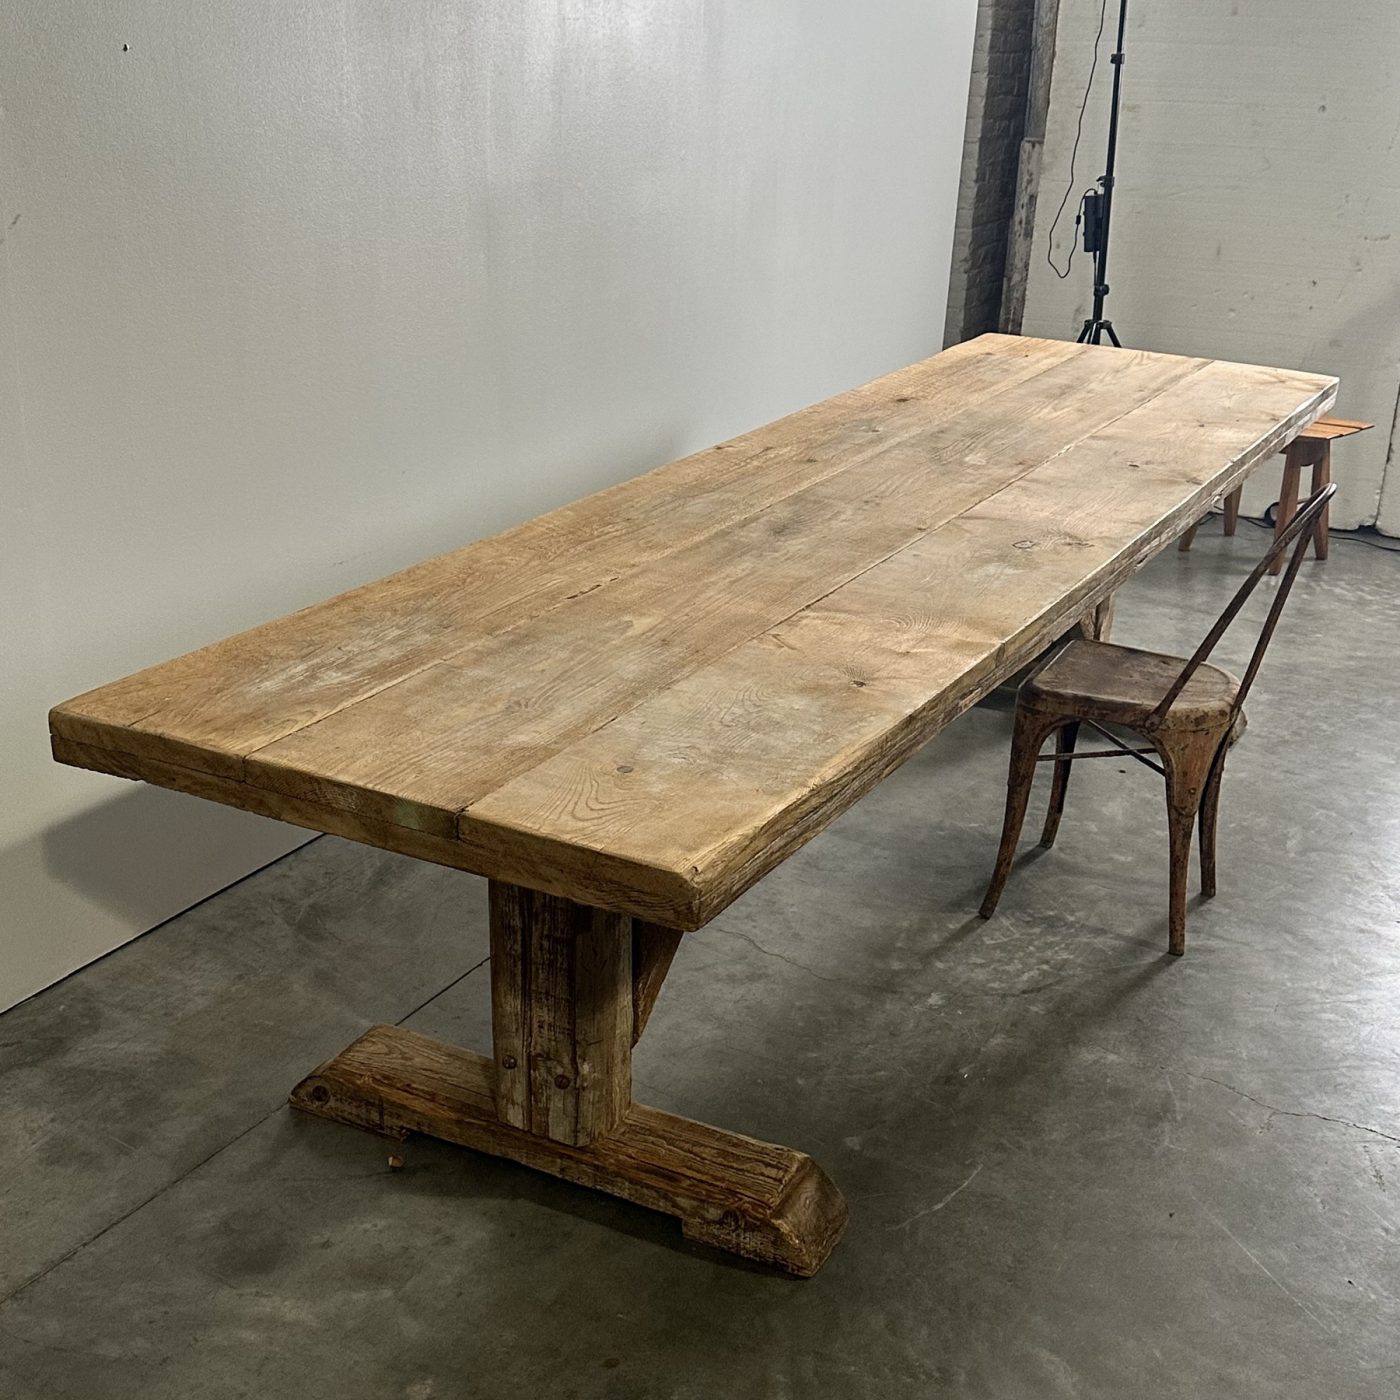 objet-vagabond-primitive-table0004